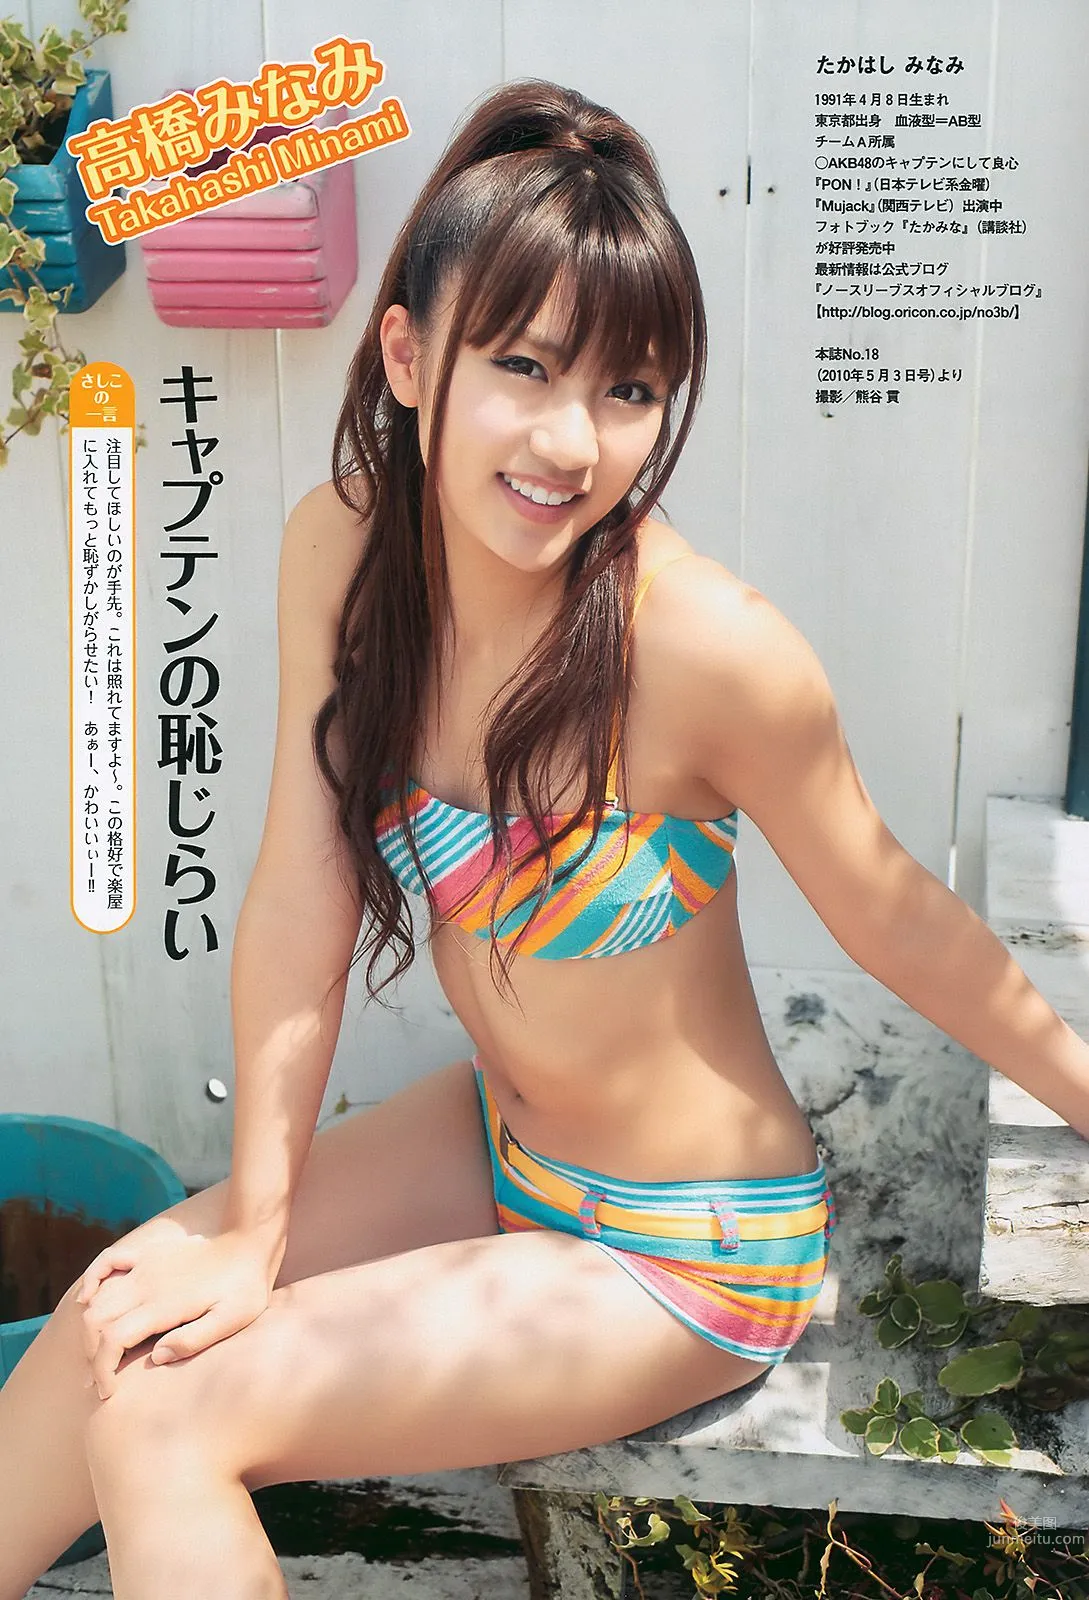 指原莉乃 小池里奈 甲斐まり恵 中村知世 AKB48 鈴木砂羽 [Weekly Playboy] 2010年No.48 写真杂志28